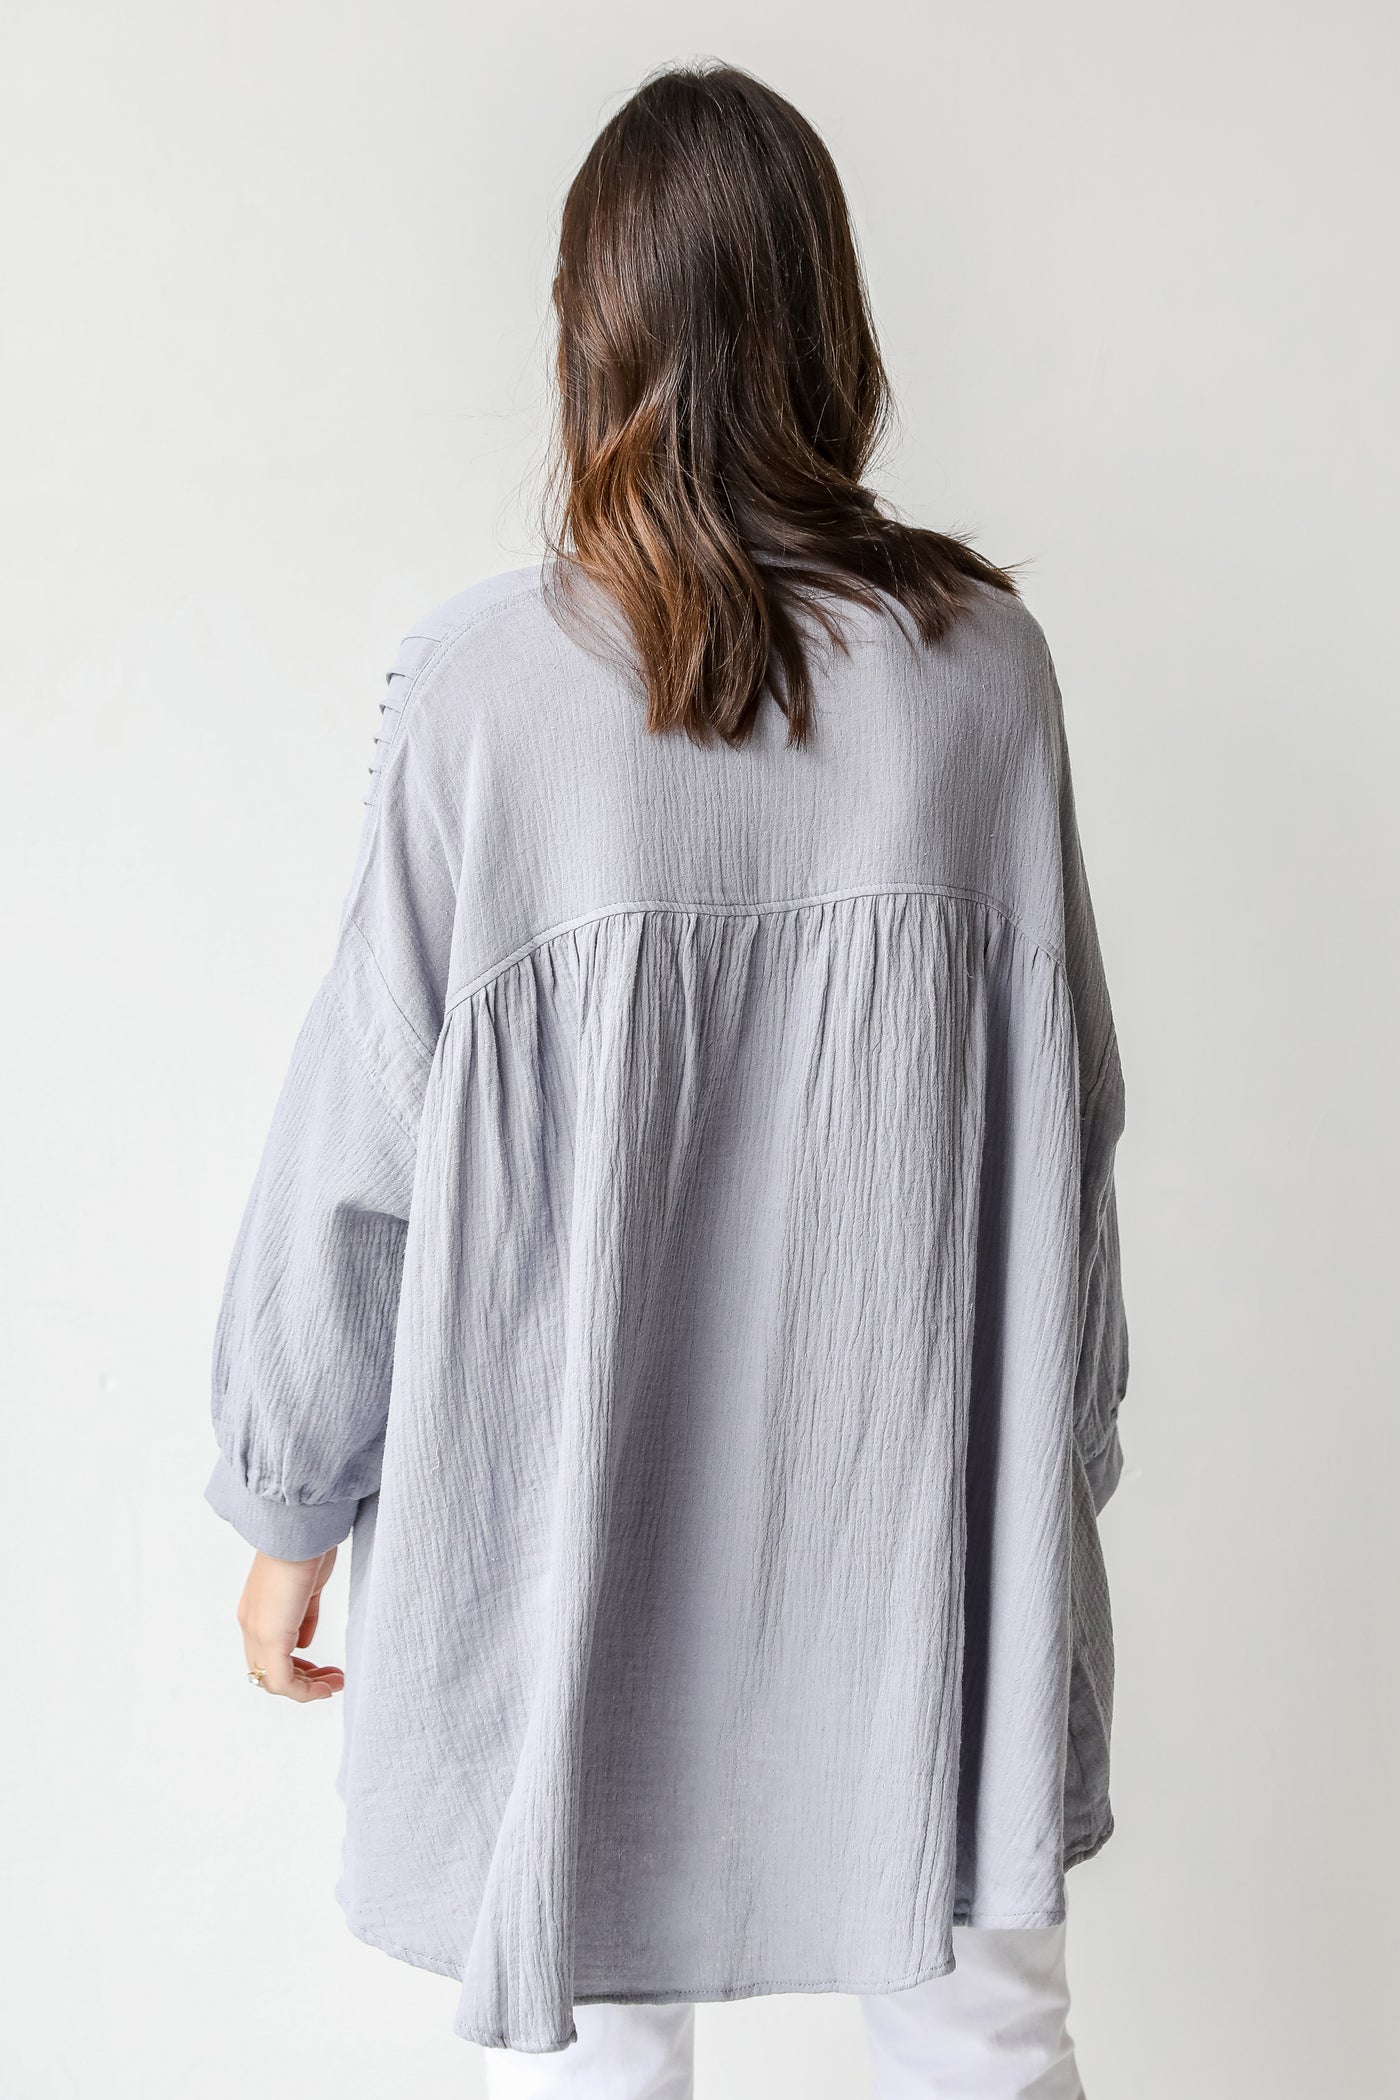 Oversized Linen Tunic in denim back view